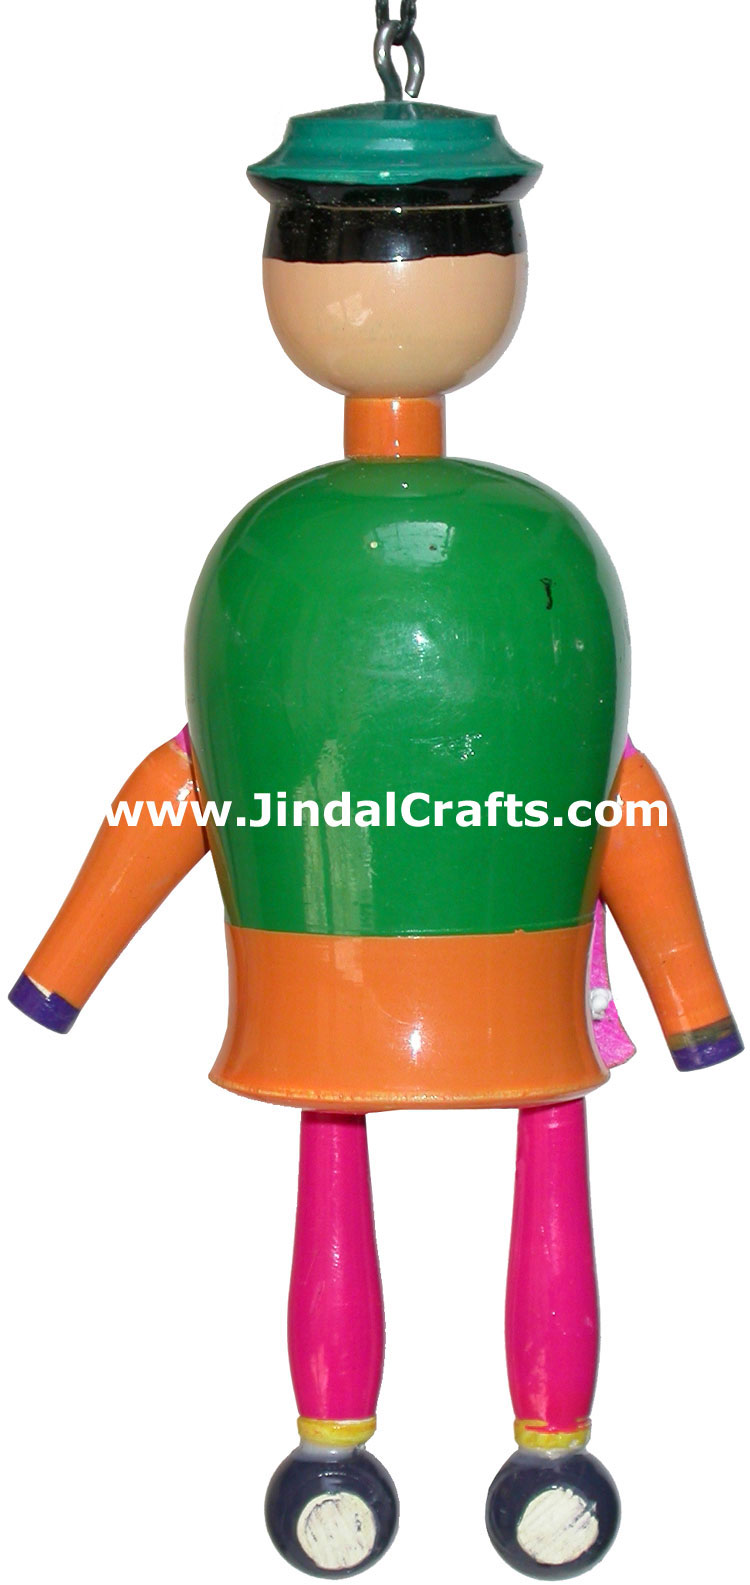 Dancing Joker - Handmade Wooden Toy from India